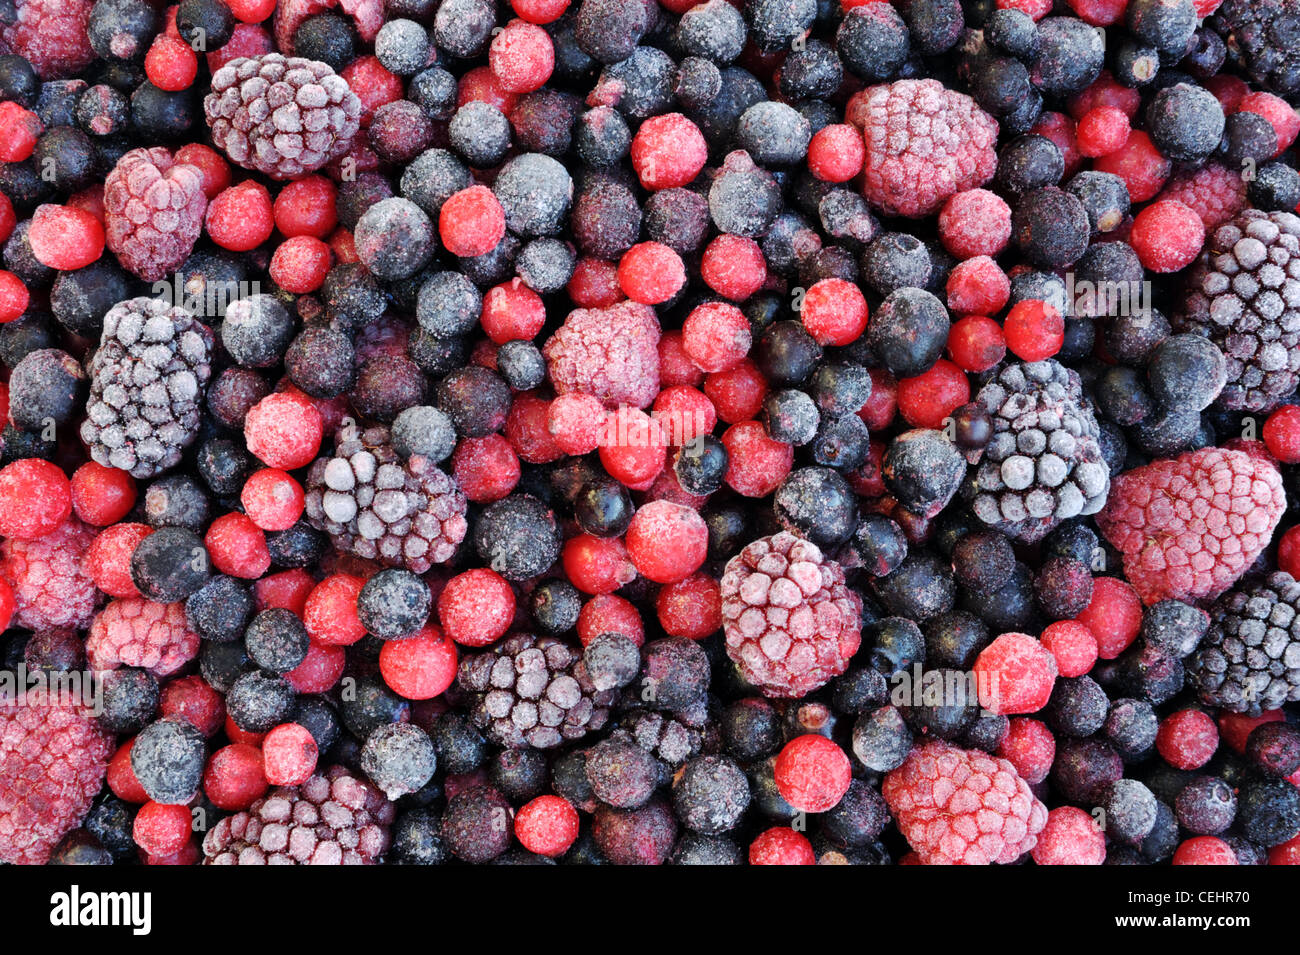 Nahaufnahme von gefrorenen gemischten Früchten - Beere - rote Johannisbeere, Cranberry, Himbeere, Brombeere, Heidelbeere, Heidelbeere, schwarze Johannisbeere Stockfoto